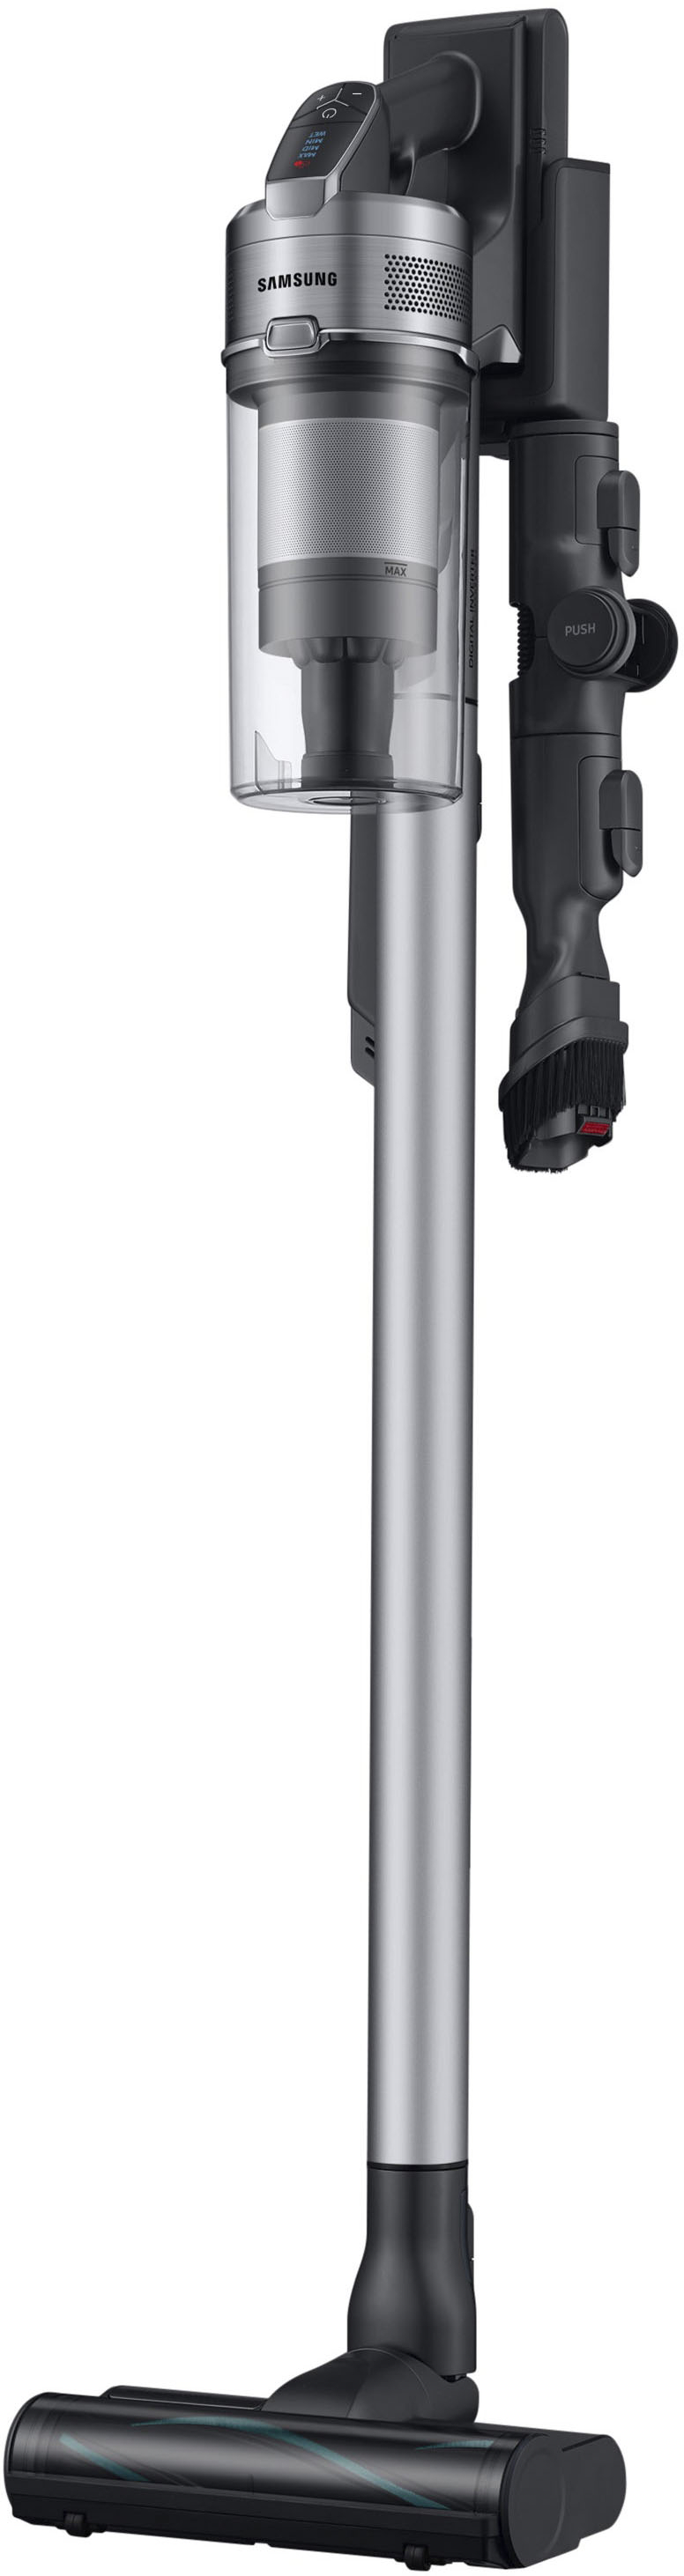 Buy Cordless Titan Jet Stick - Best ChroMetal Vacuum Samsung VS20T7511T5/AA 75